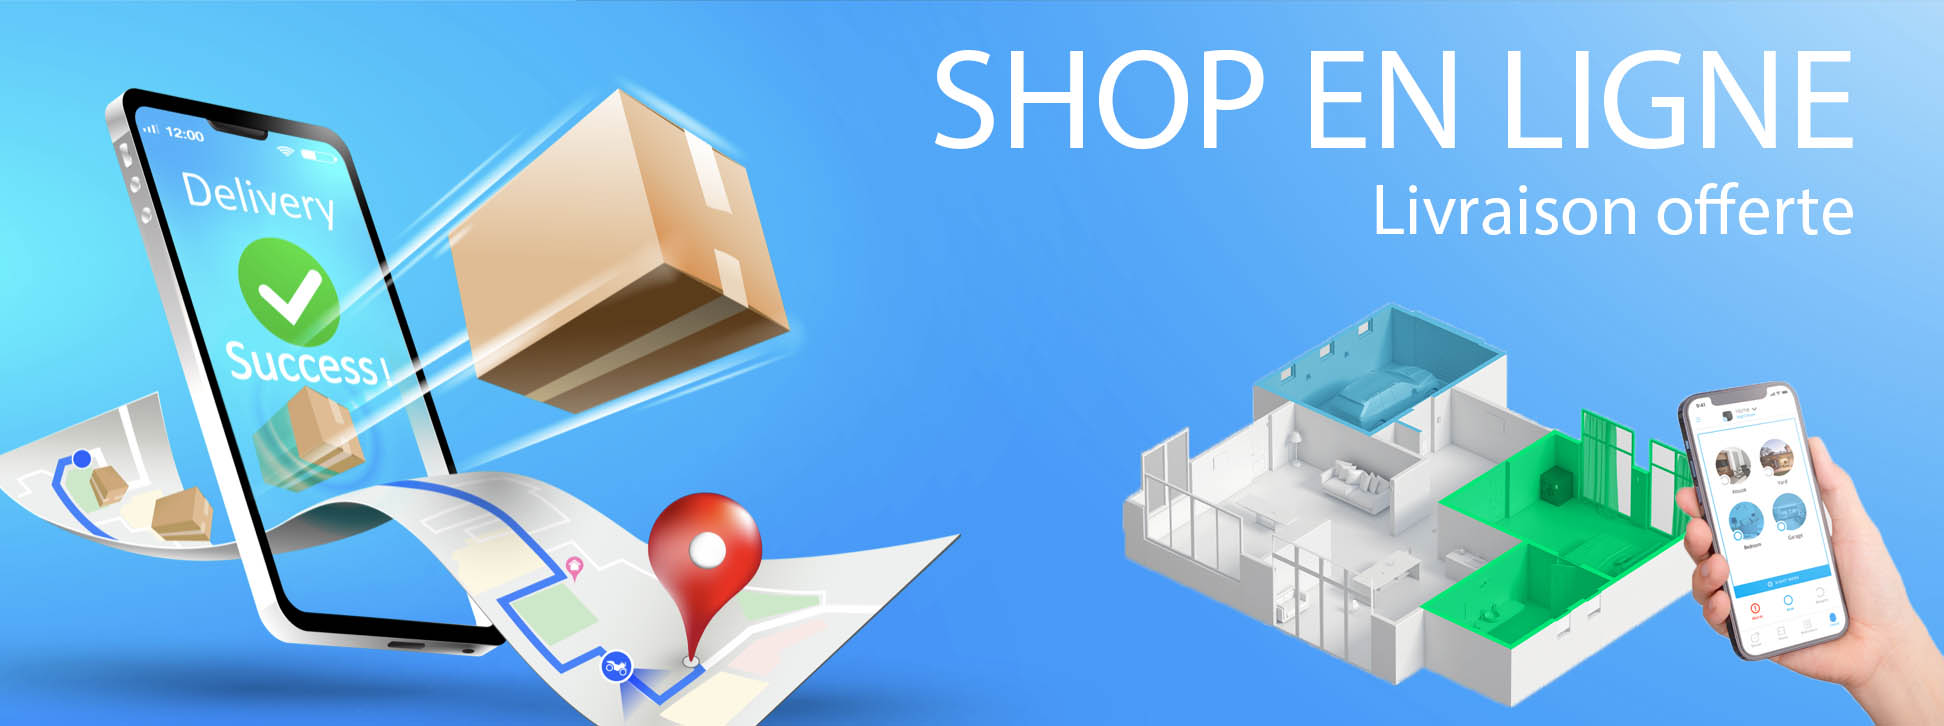 ALARME - Shop en ligne